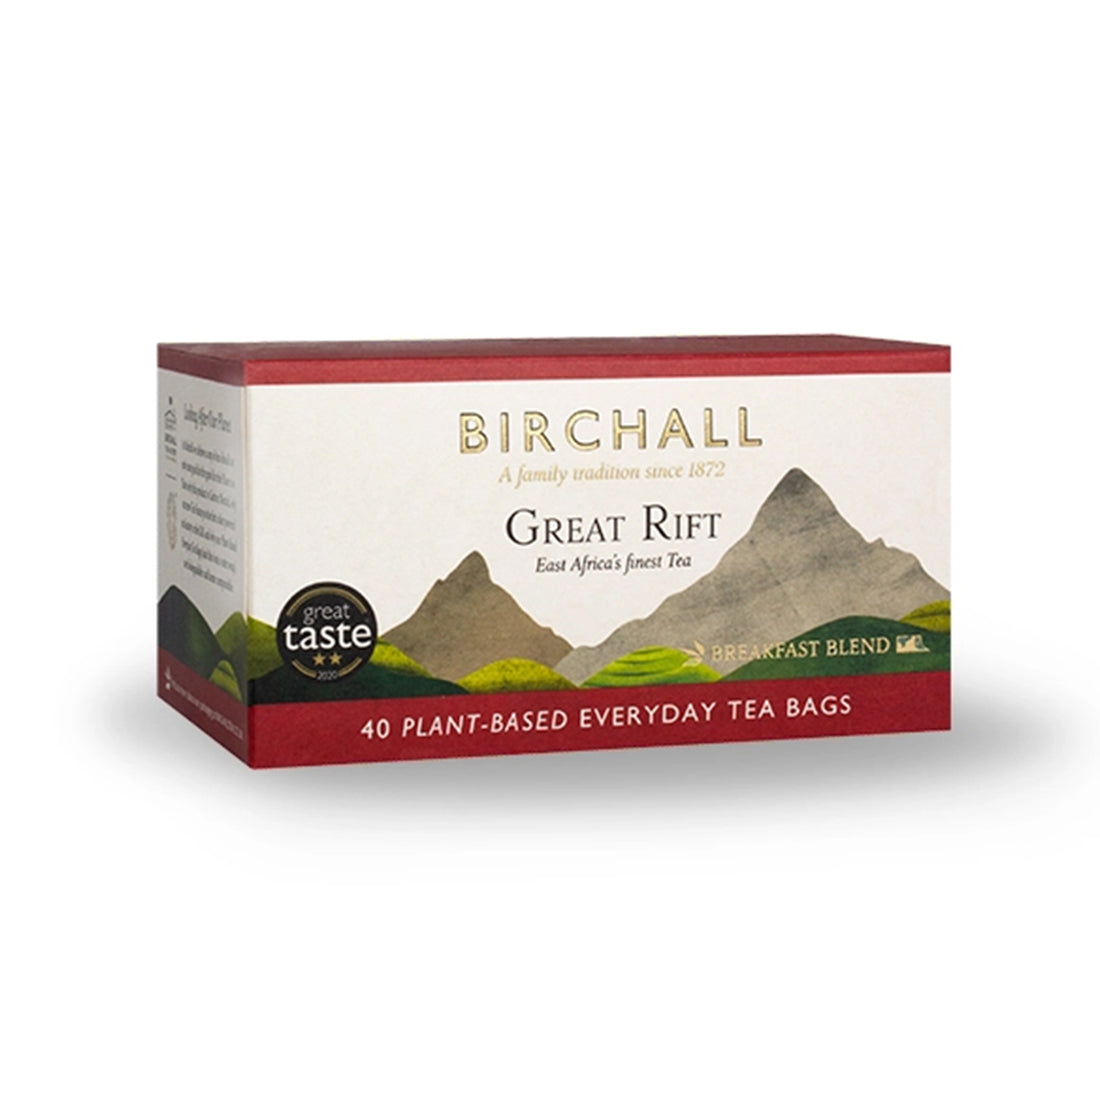 Birchall, Birchall Plant-Based Everyday Tea Bags 40pcs - Great Rift Breakfast Blend, Redber Coffee